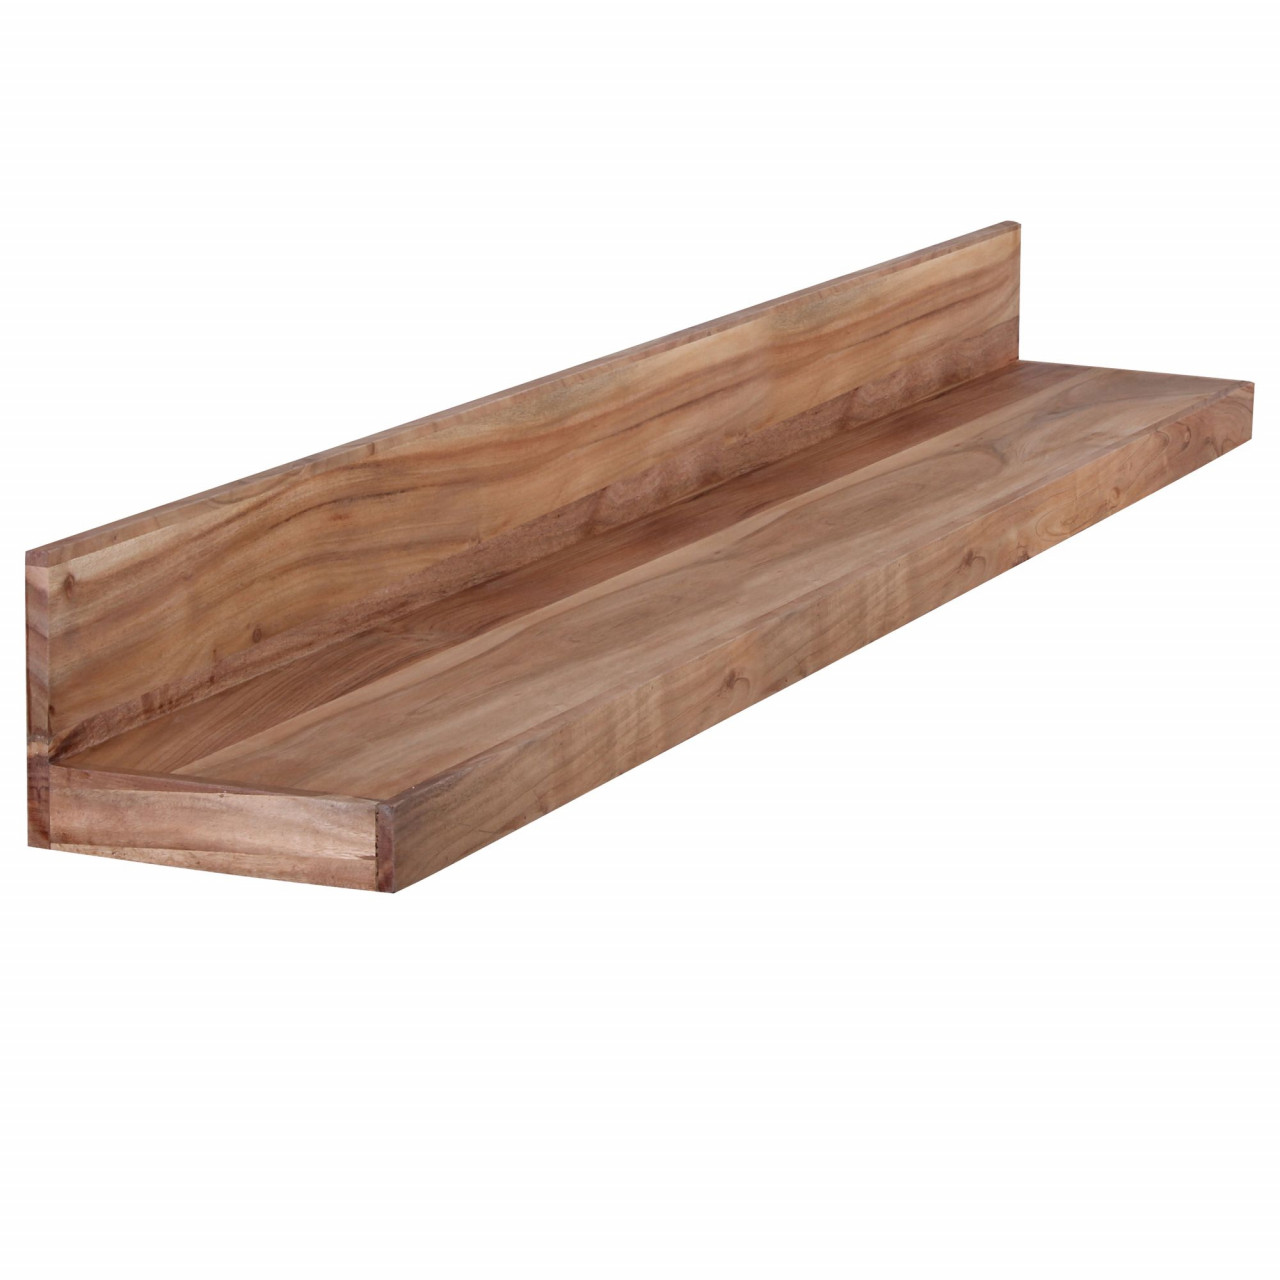 Wandregal MUMBAI Massiv-Holz Akazie Holzregal 160 cm Landhaus-Stil H?nge-Regal Echt-Holz Wand-Board Natur-Produkt